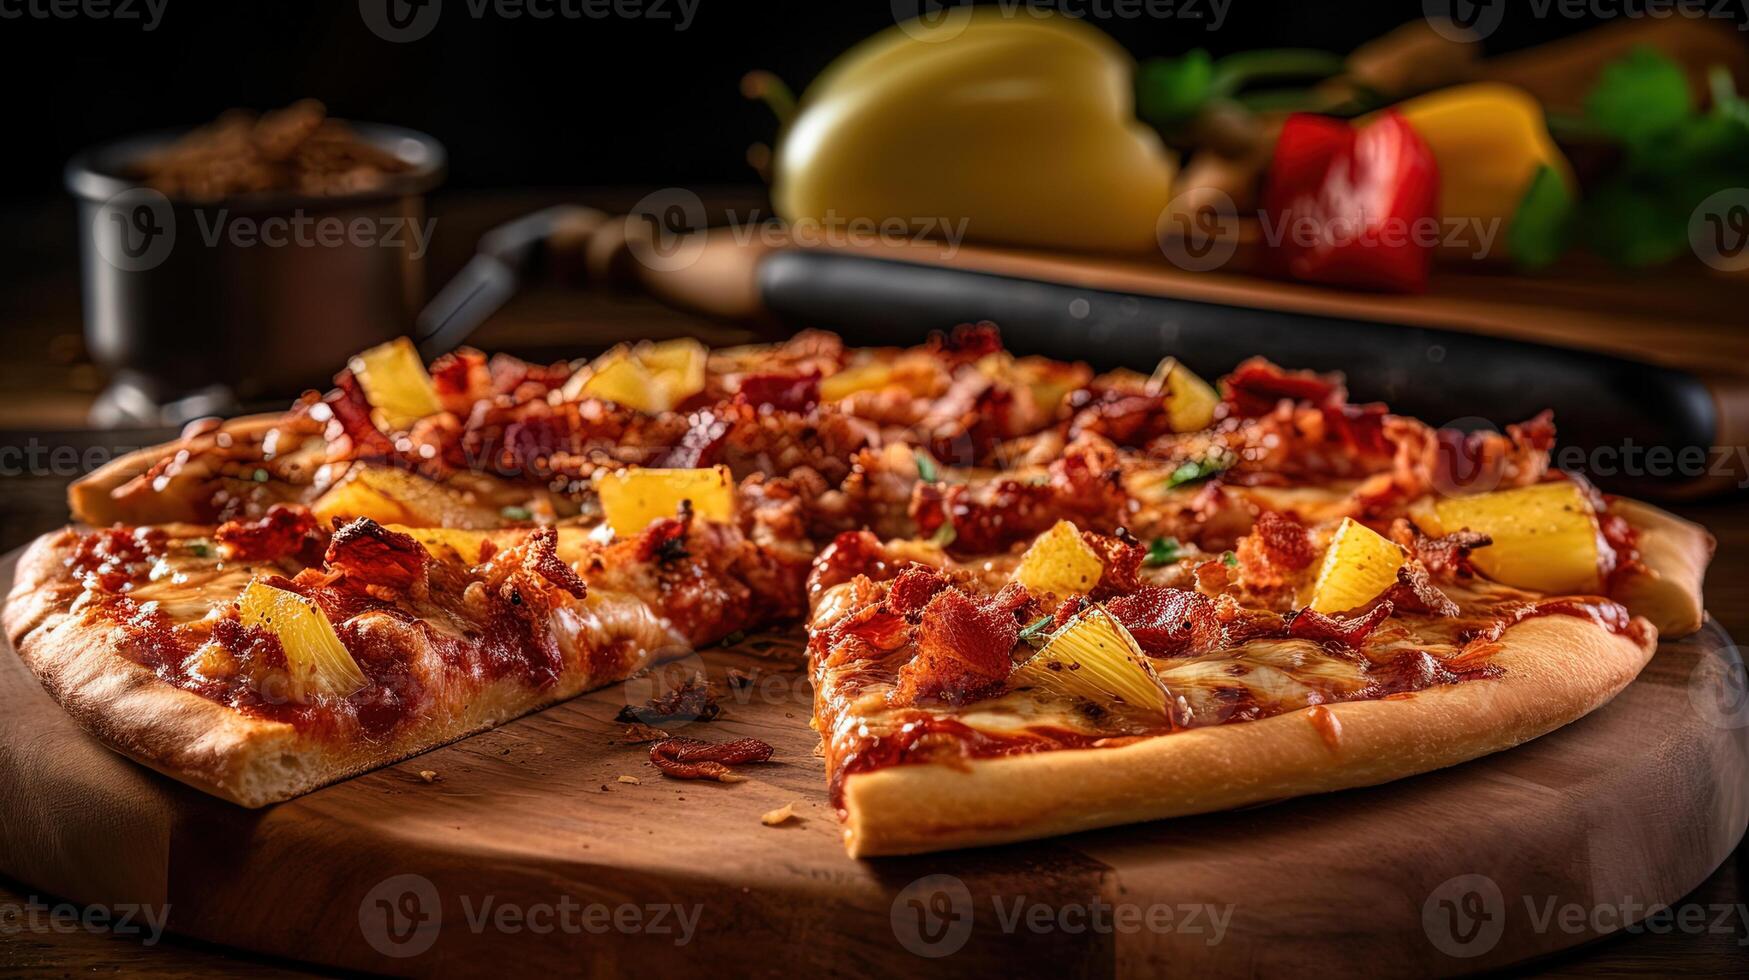 recentemente cozido delicioso pizza fez do abacaxi e bacon em de madeira corte borda para velozes Comida pronto para comer conceito. Comida fotografia, generativo ai. foto